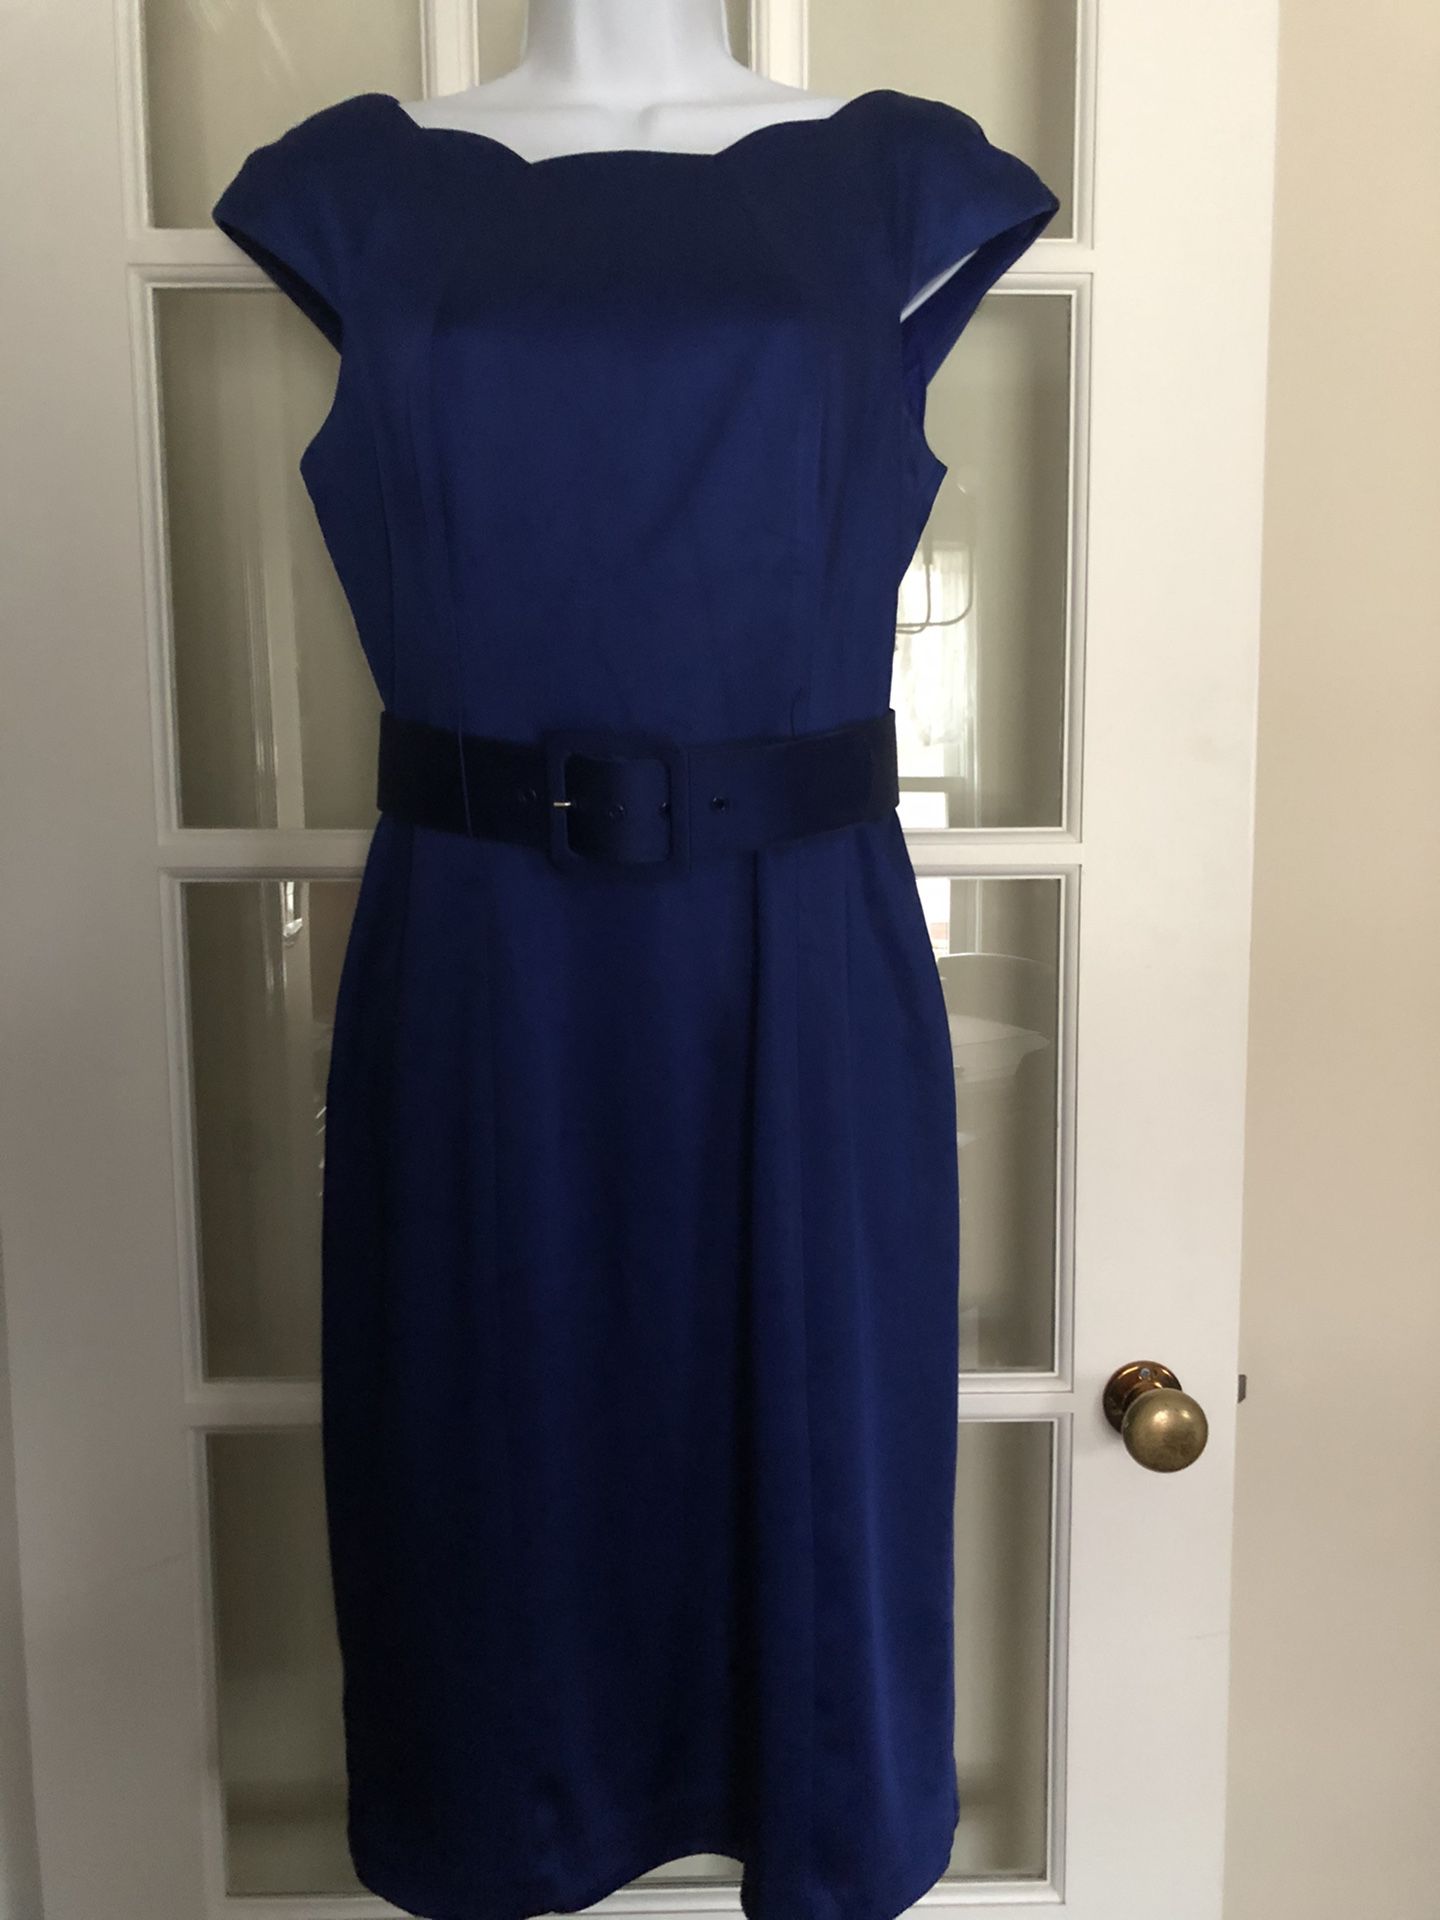 Jax Royal blue dress Size 8